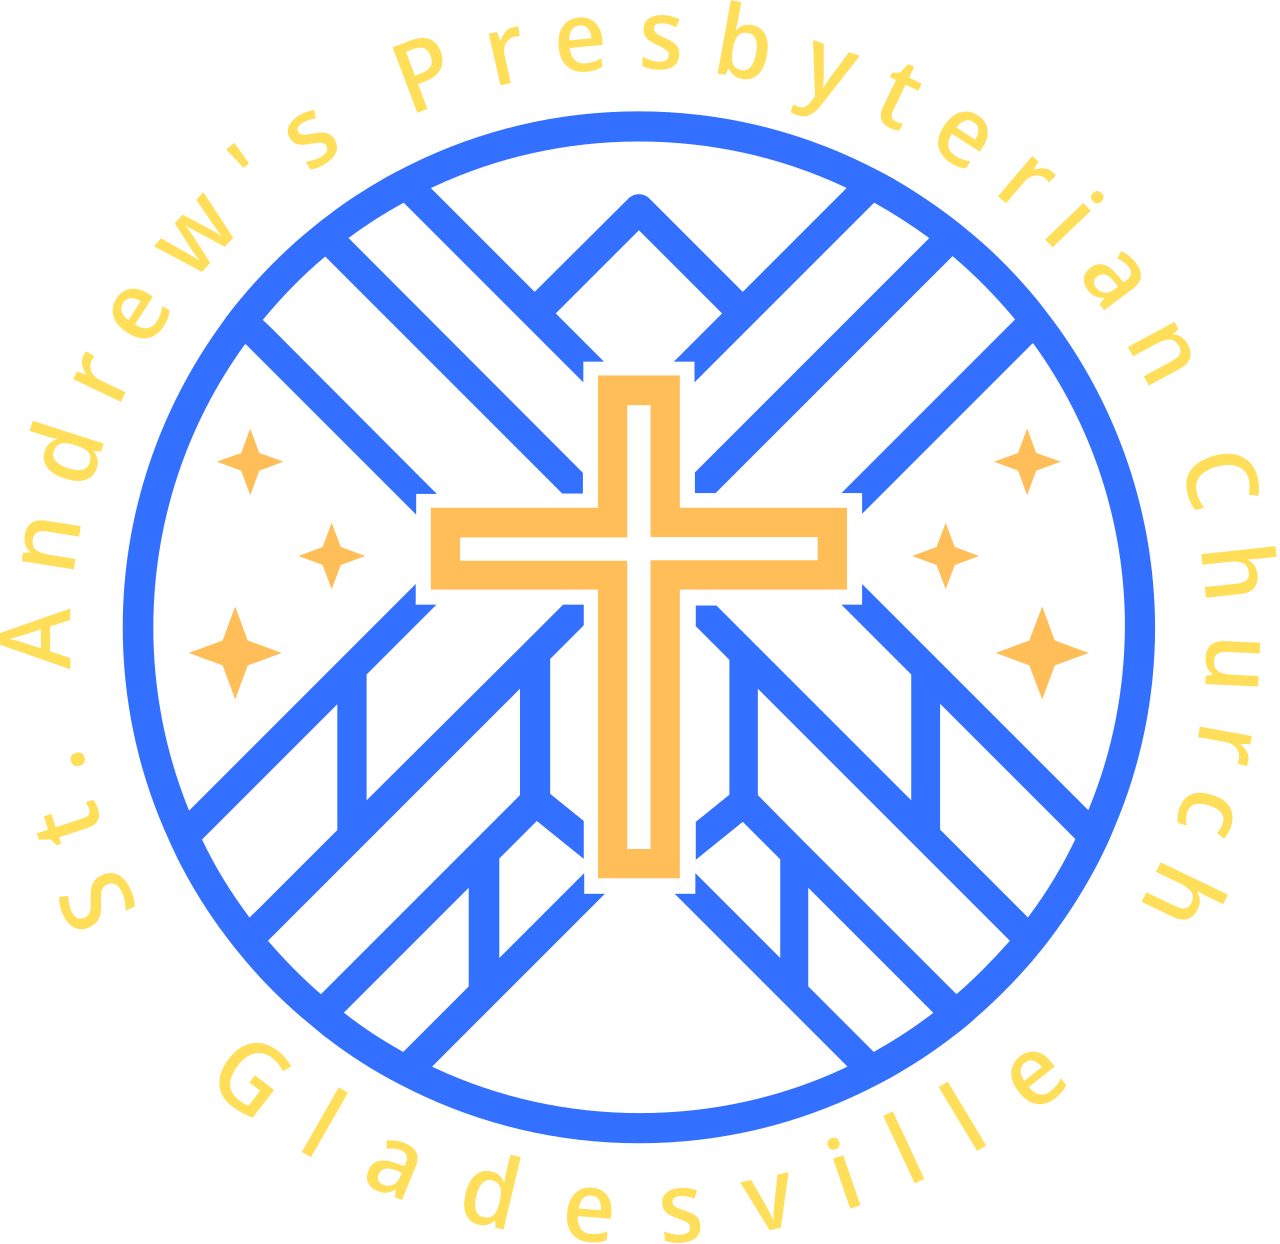 St. Andrew's Presbyterian Church's logo